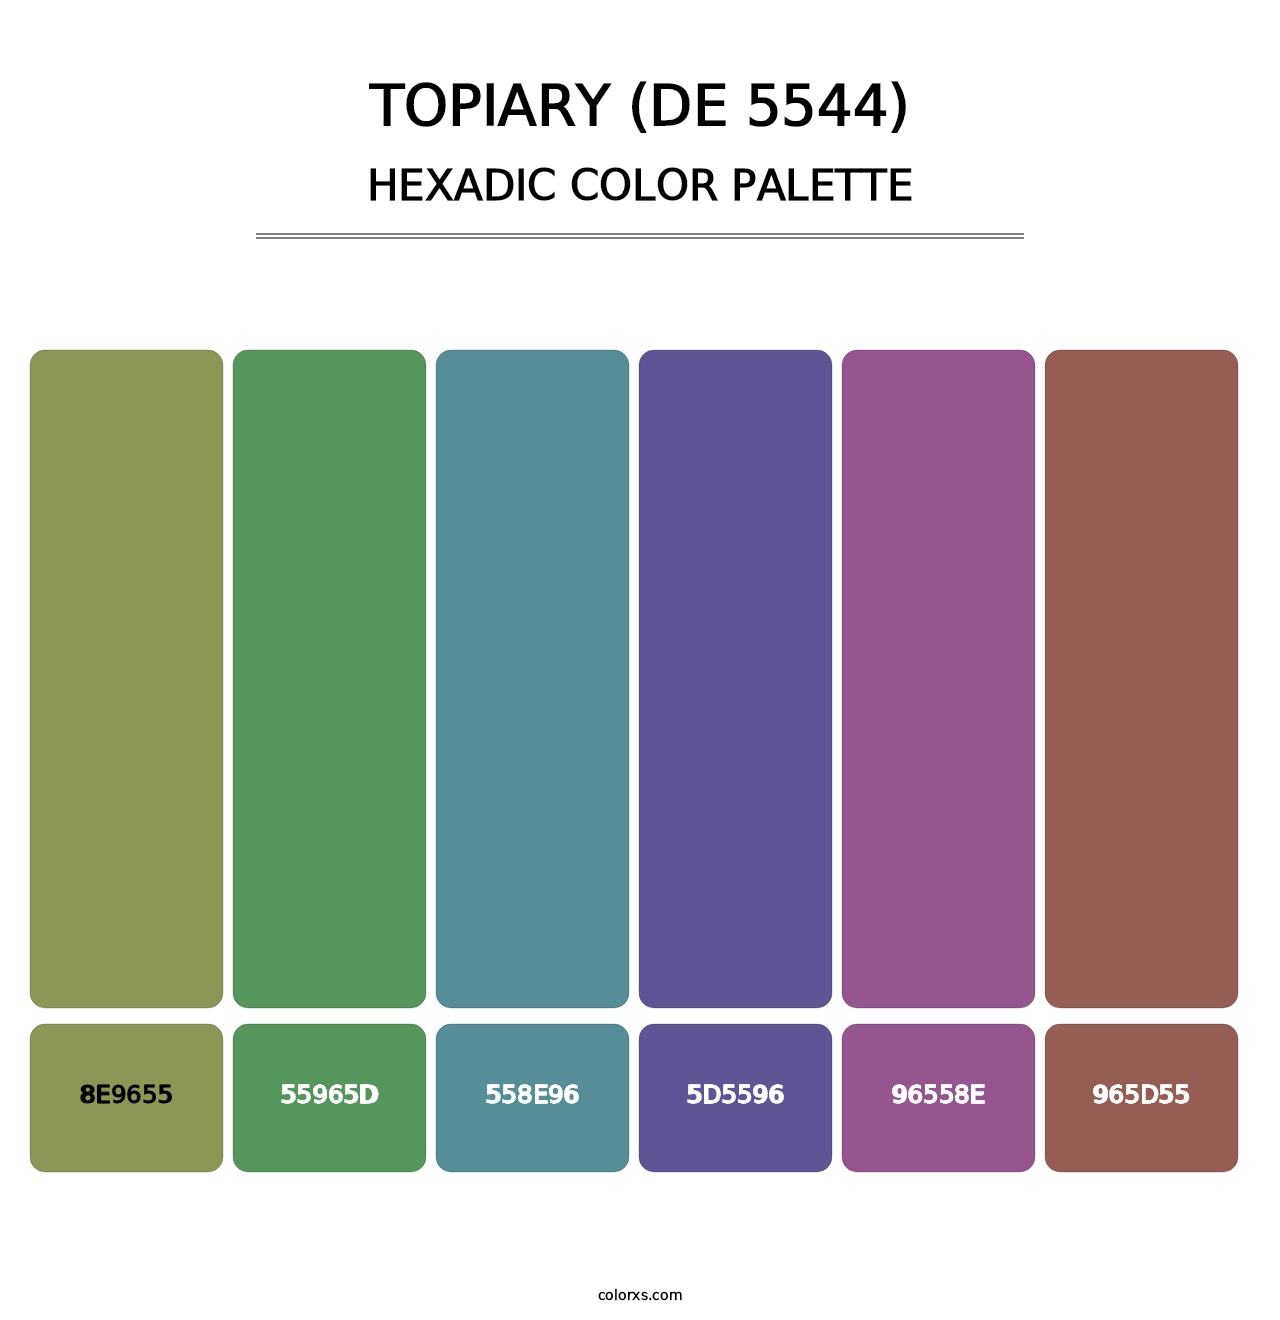 Topiary (DE 5544) - Hexadic Color Palette